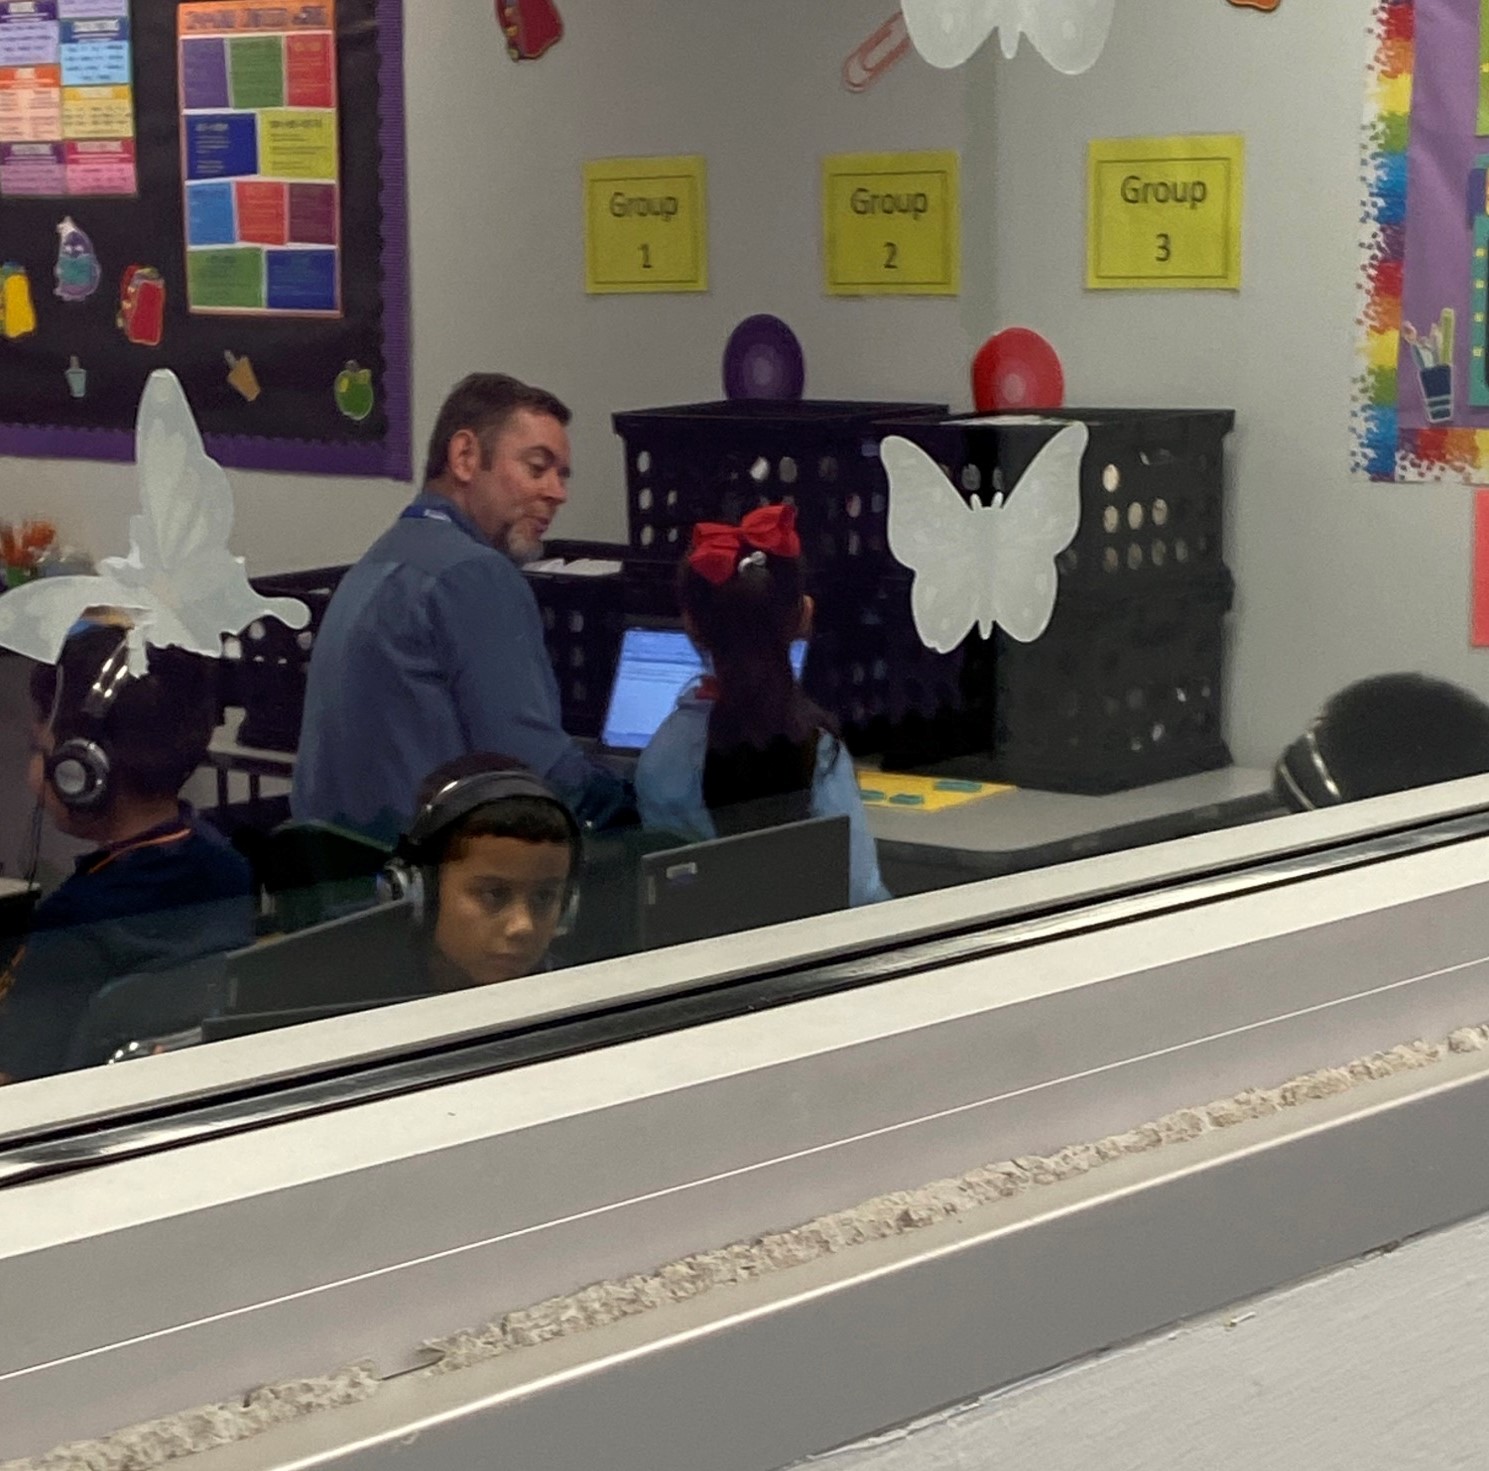 Mr. Unruh helping in a teacher's classroom